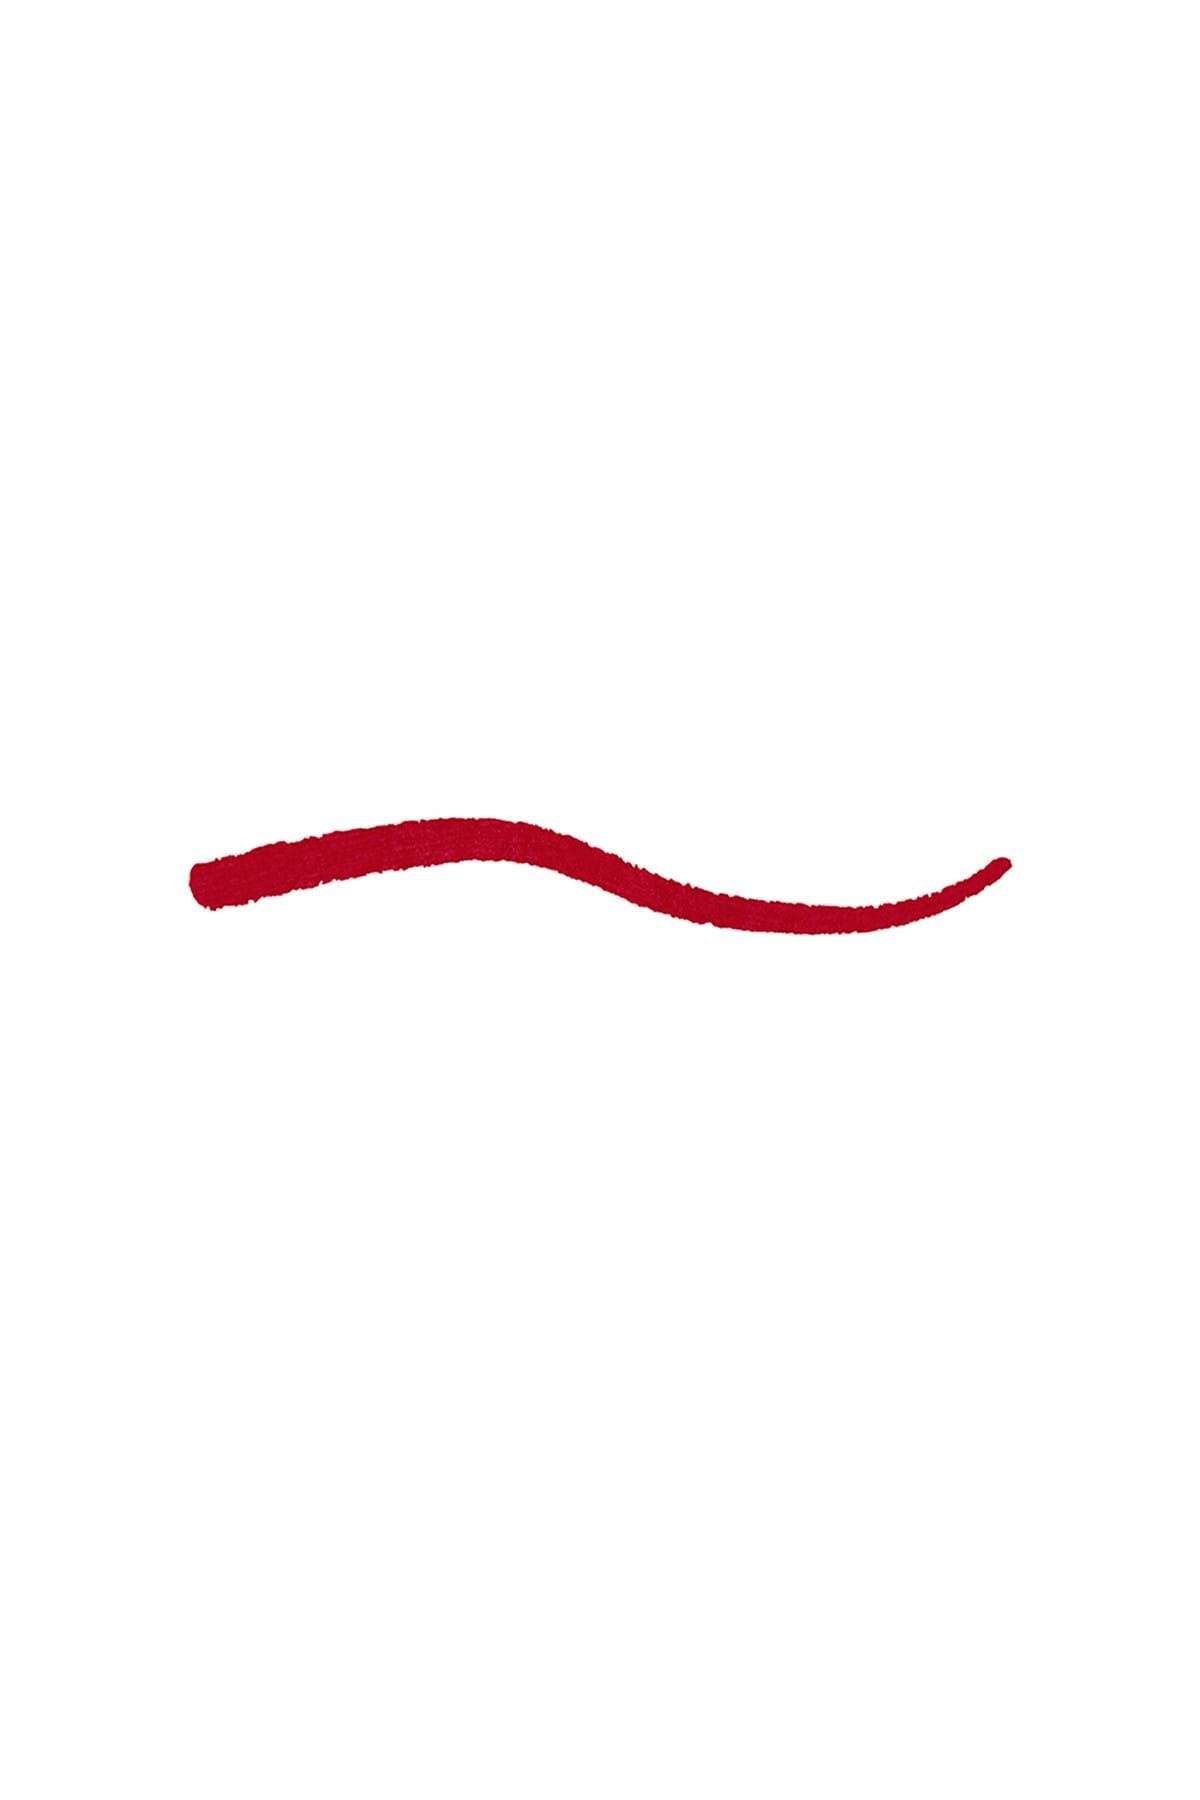 KIKO مداد لب Smart Fusion بافت نرم و روان شماره 516 رنگ قرمز گیلاسی